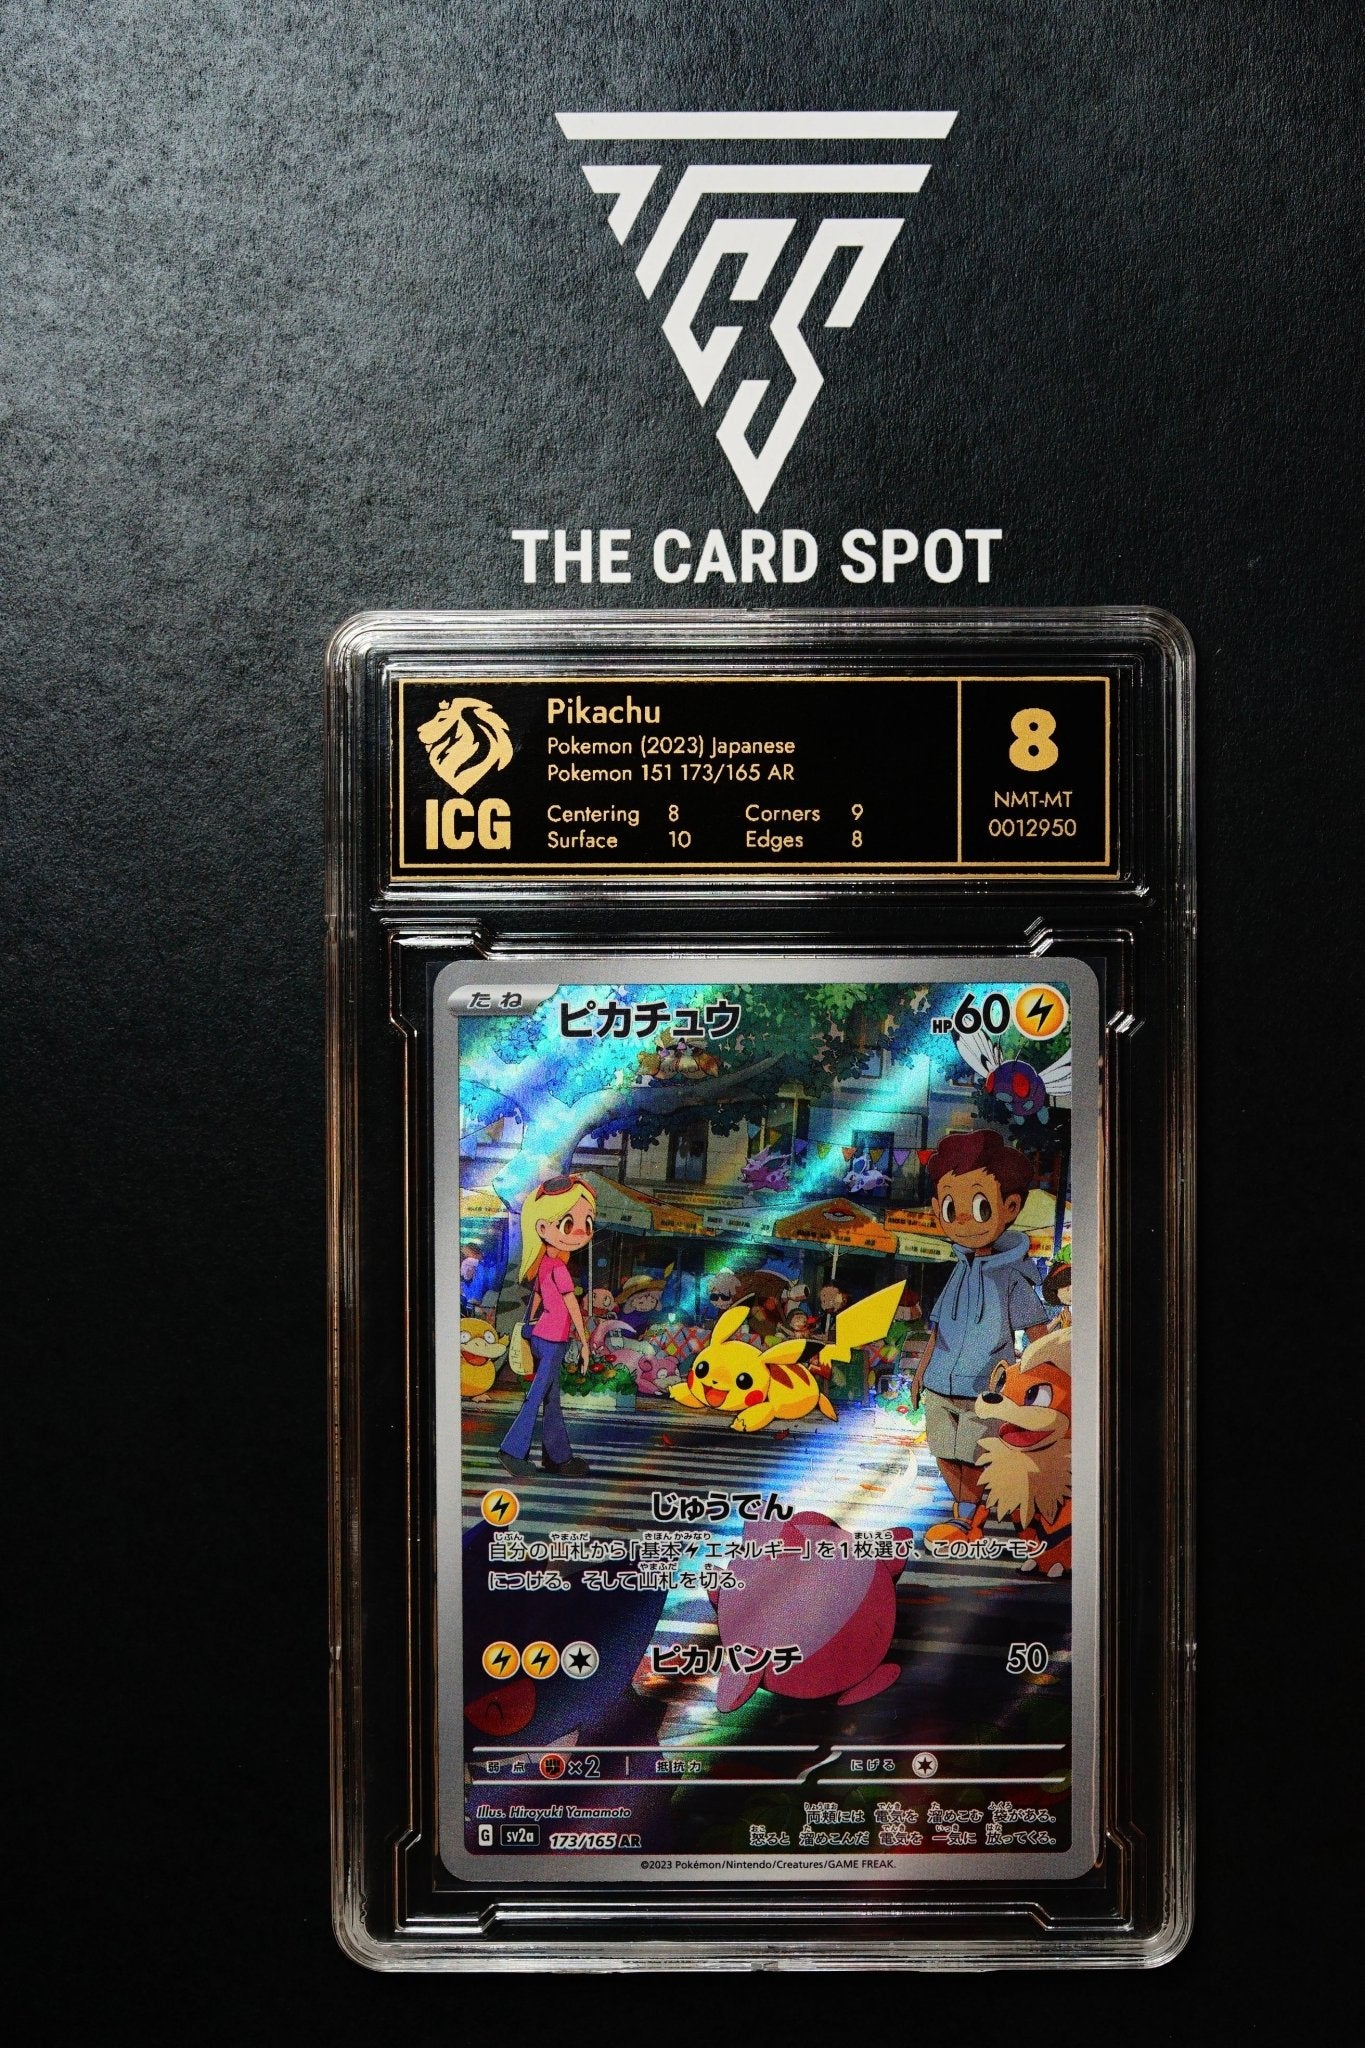 Pikachu 173/165 SAR ICG 8 - Pokemon 151 (Like PSA) - THE CARD SPOT PTY LTD.Pokemon GradedPokémon